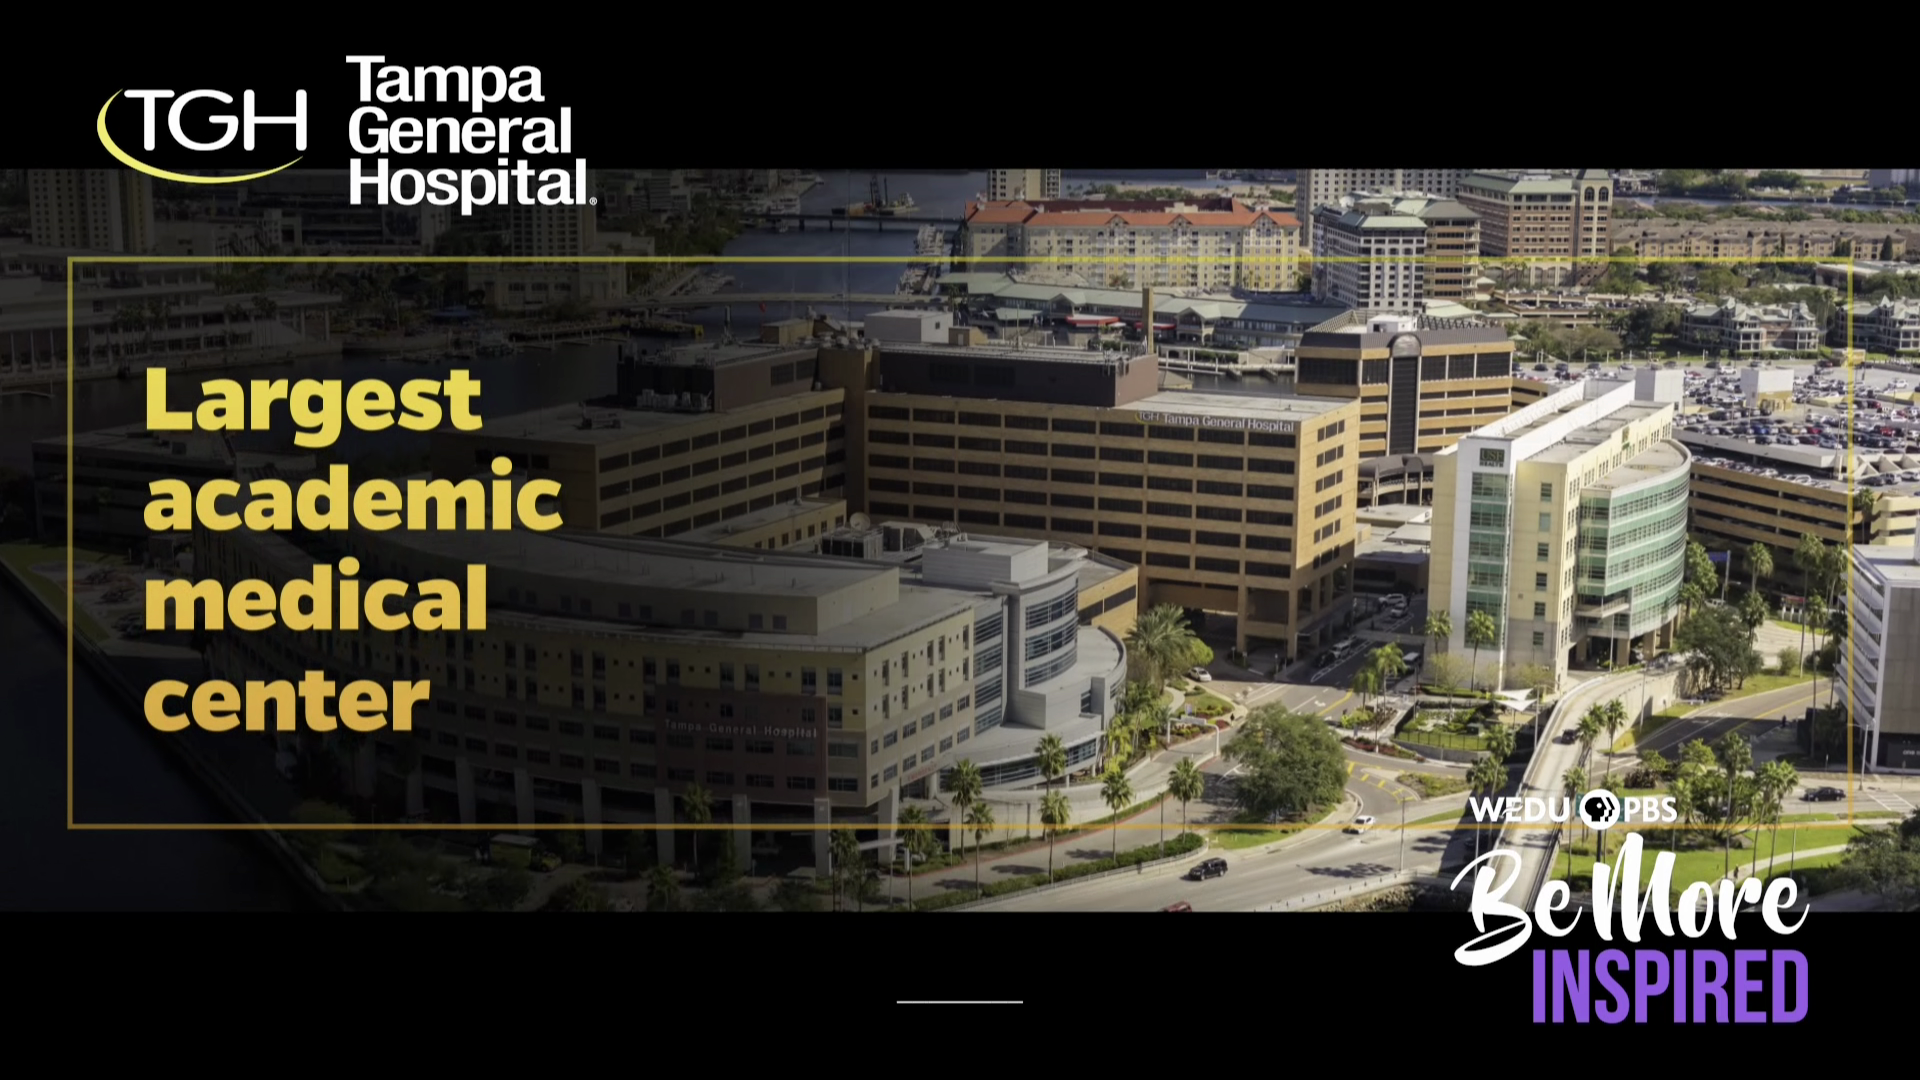 Tampa General Hospital - Be More Inspired Sponsor